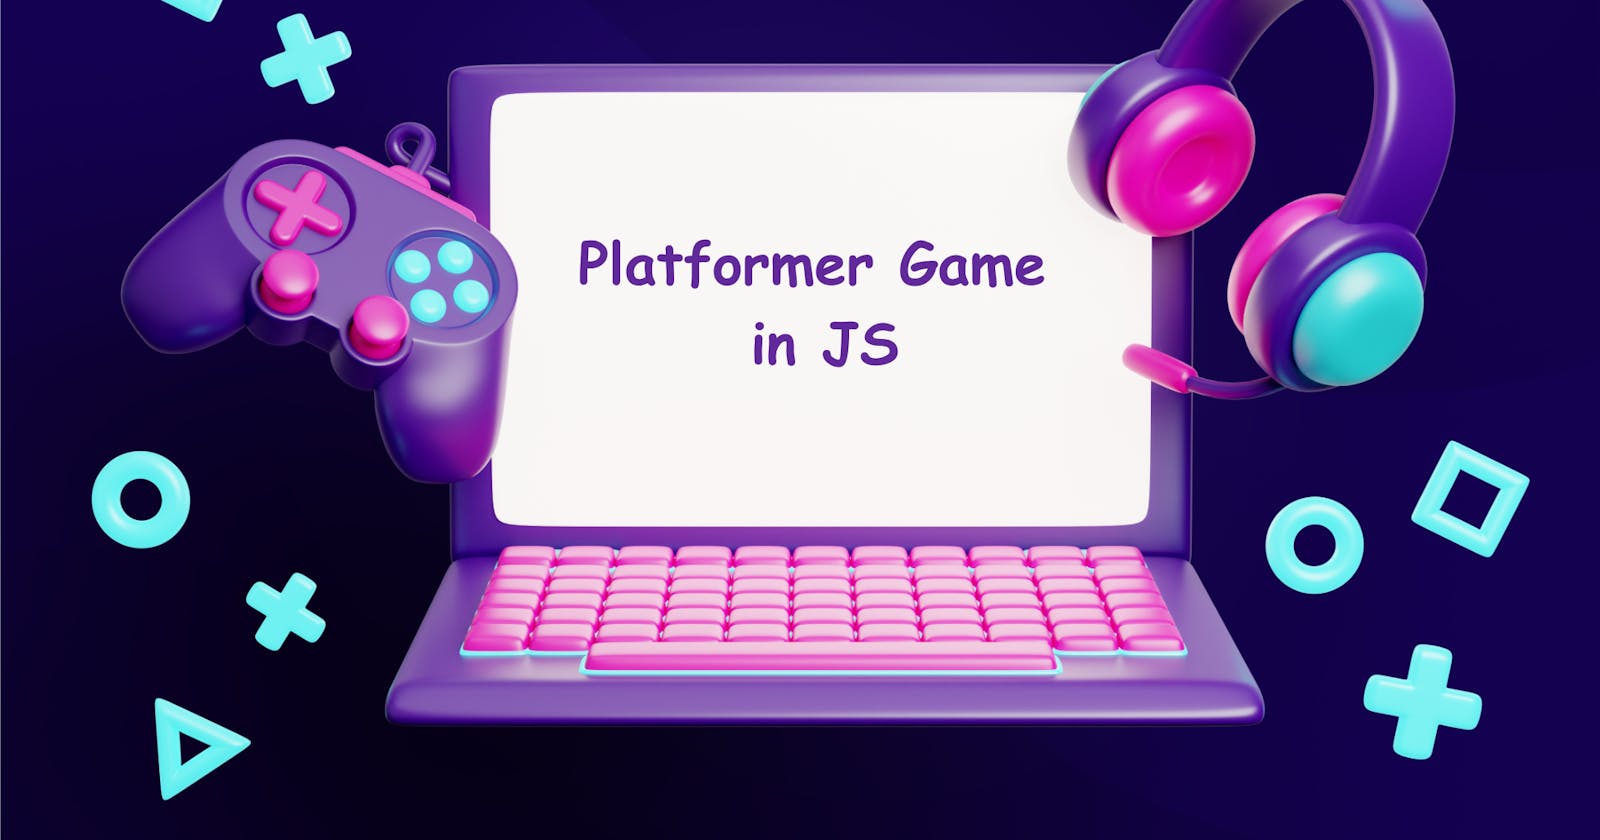 Platformer Game in JavaScript